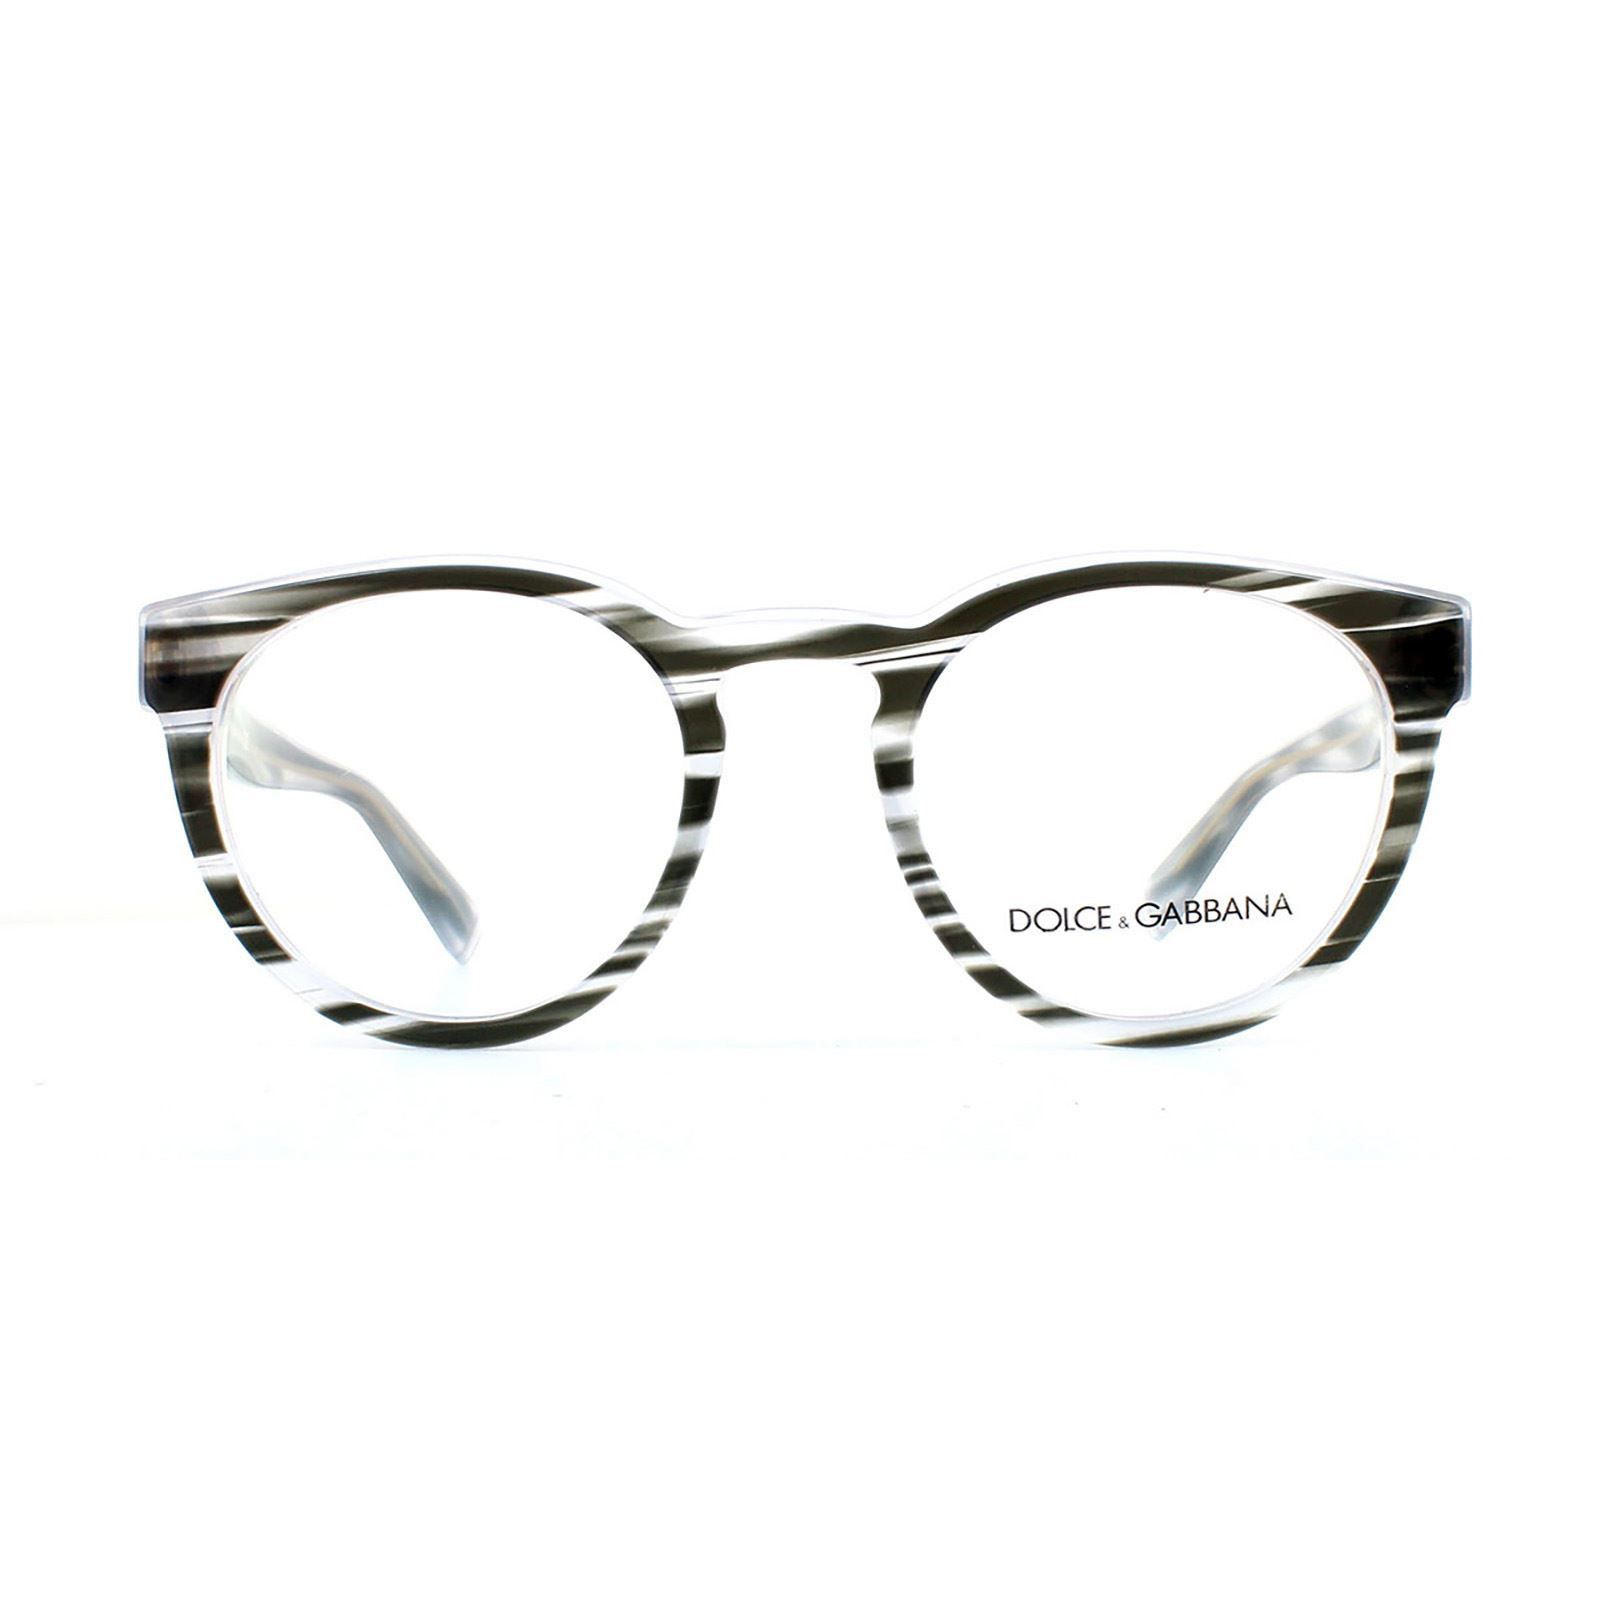 Dolce and Gabbana Glasses Frames 3251 3050 Striped Black Men 49mm